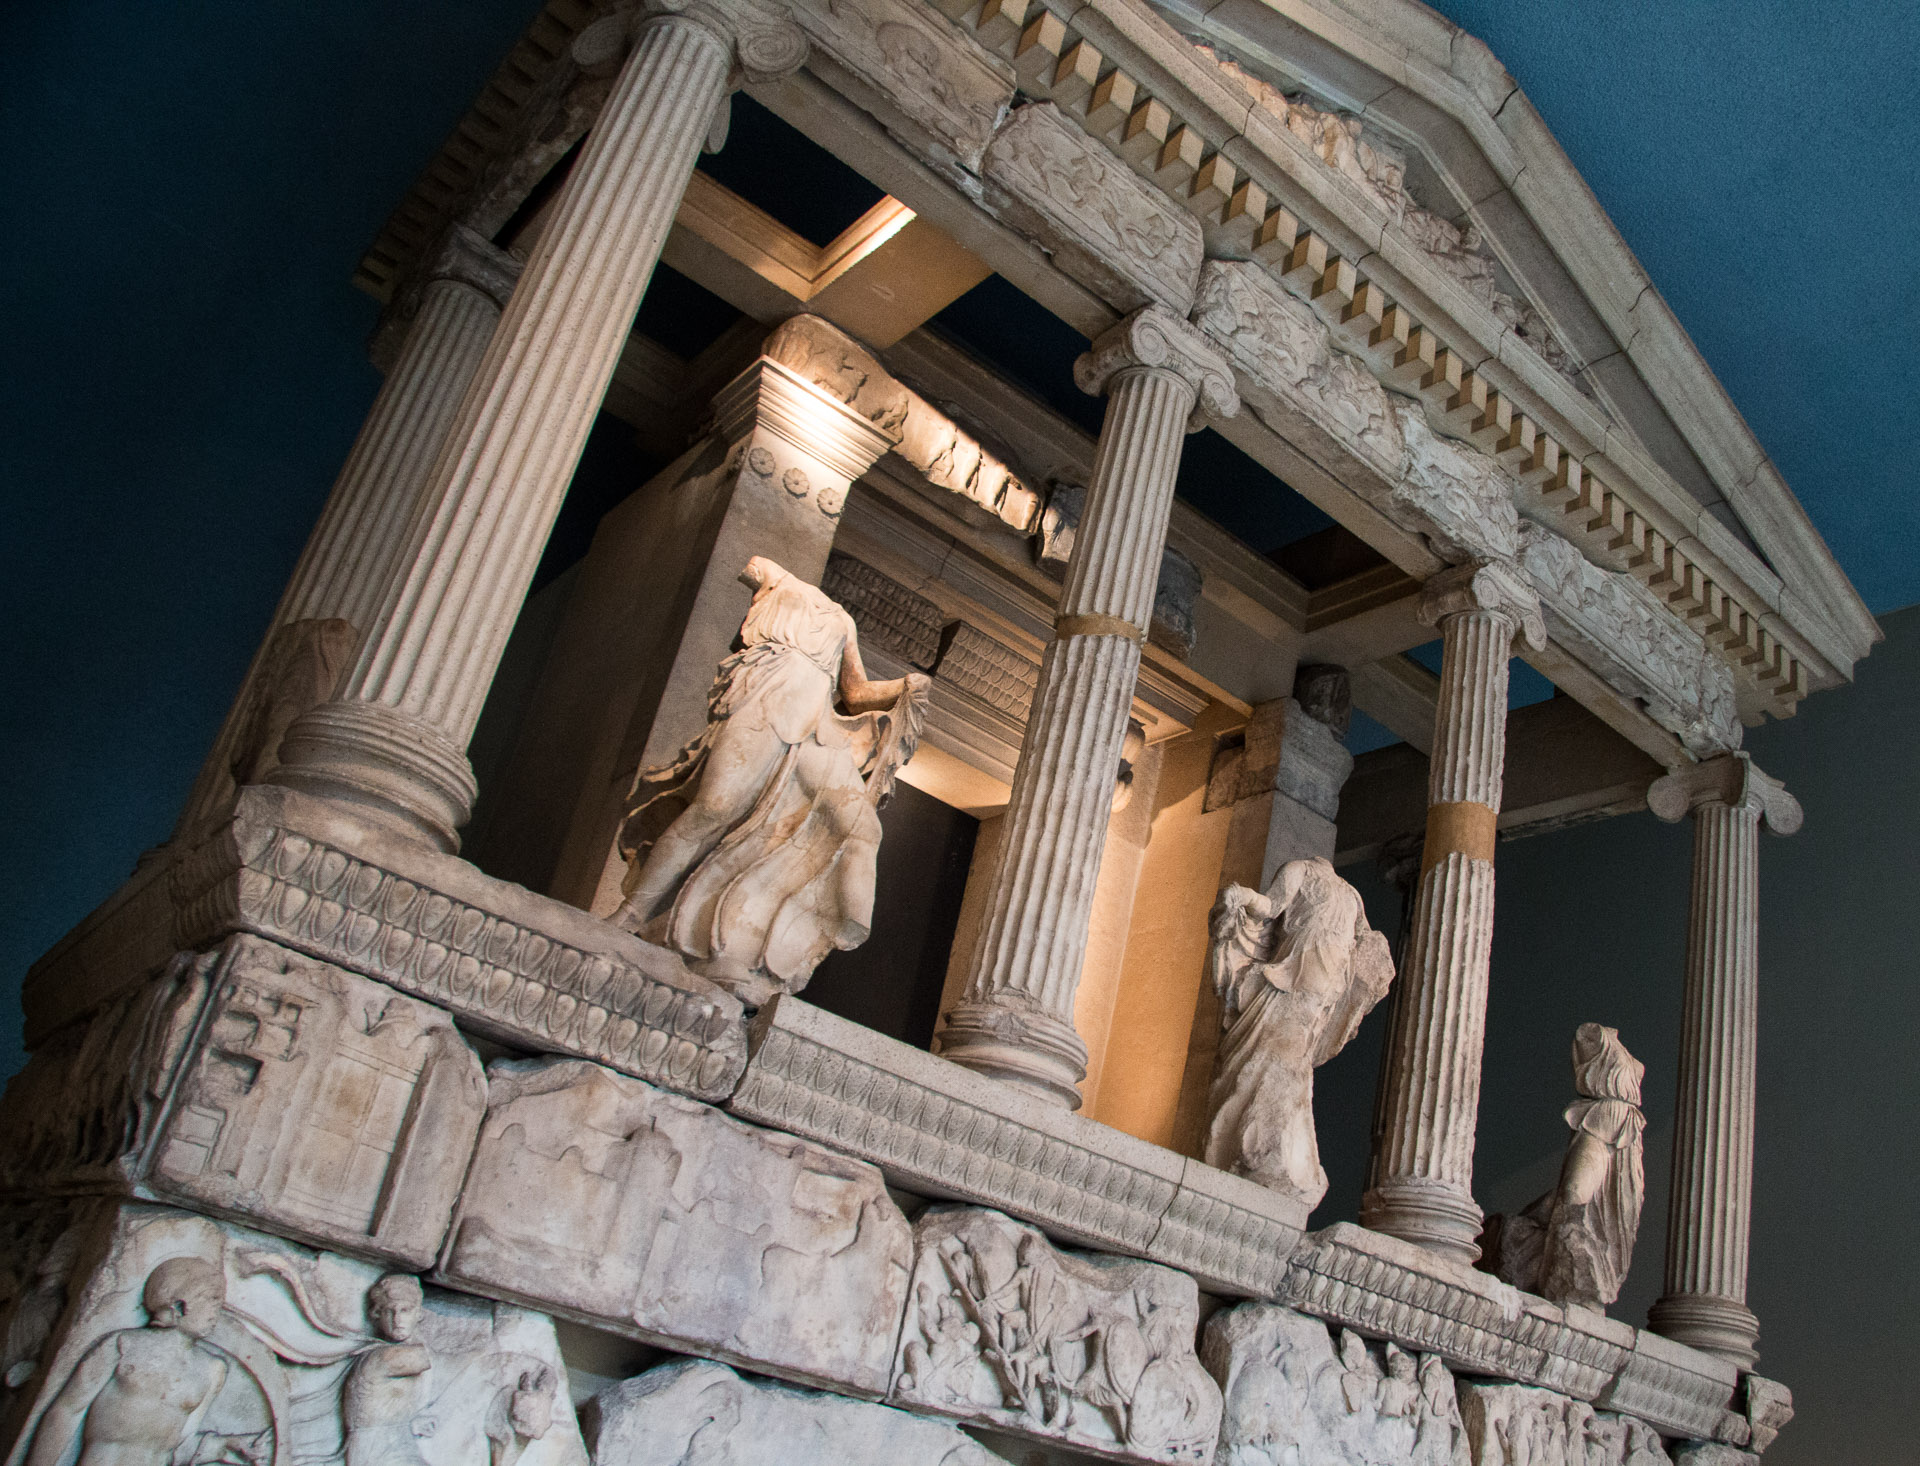 Nereid Monument at the British Museum in London